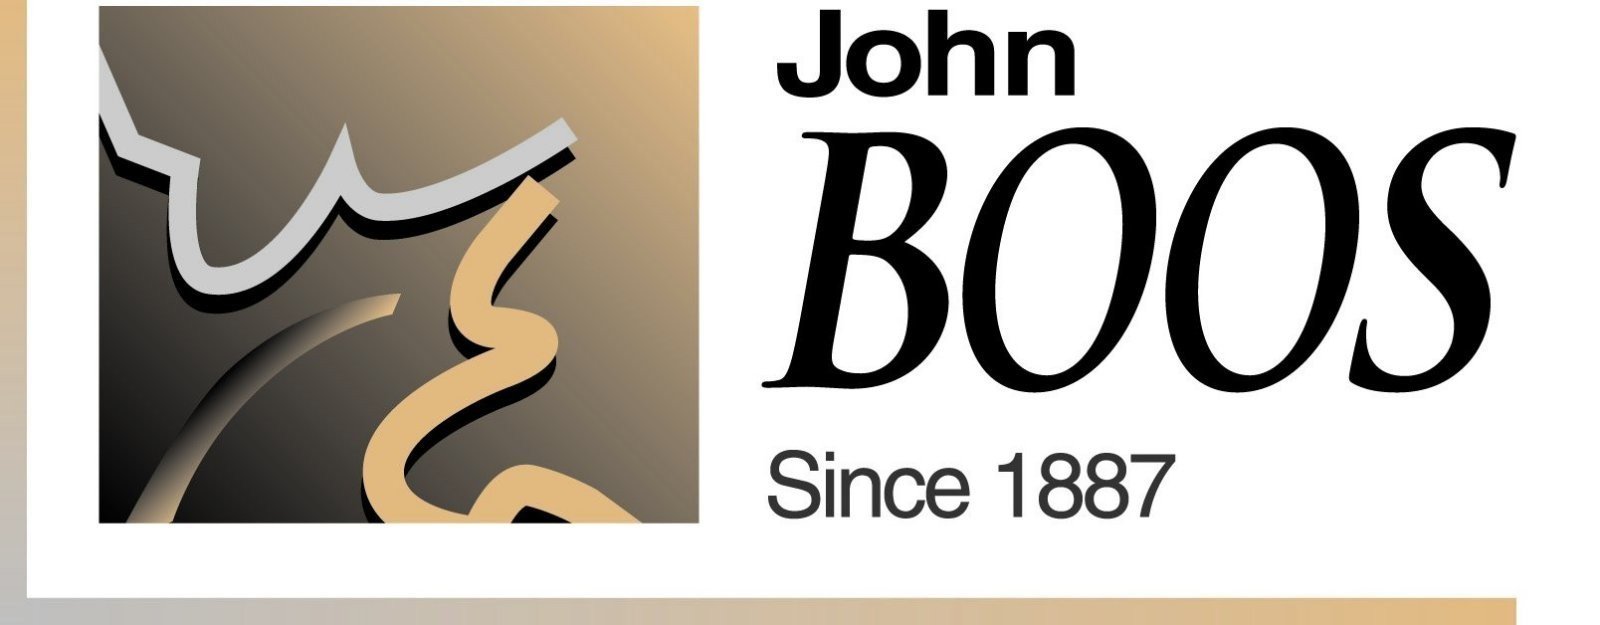 John Boos Logo.jpg